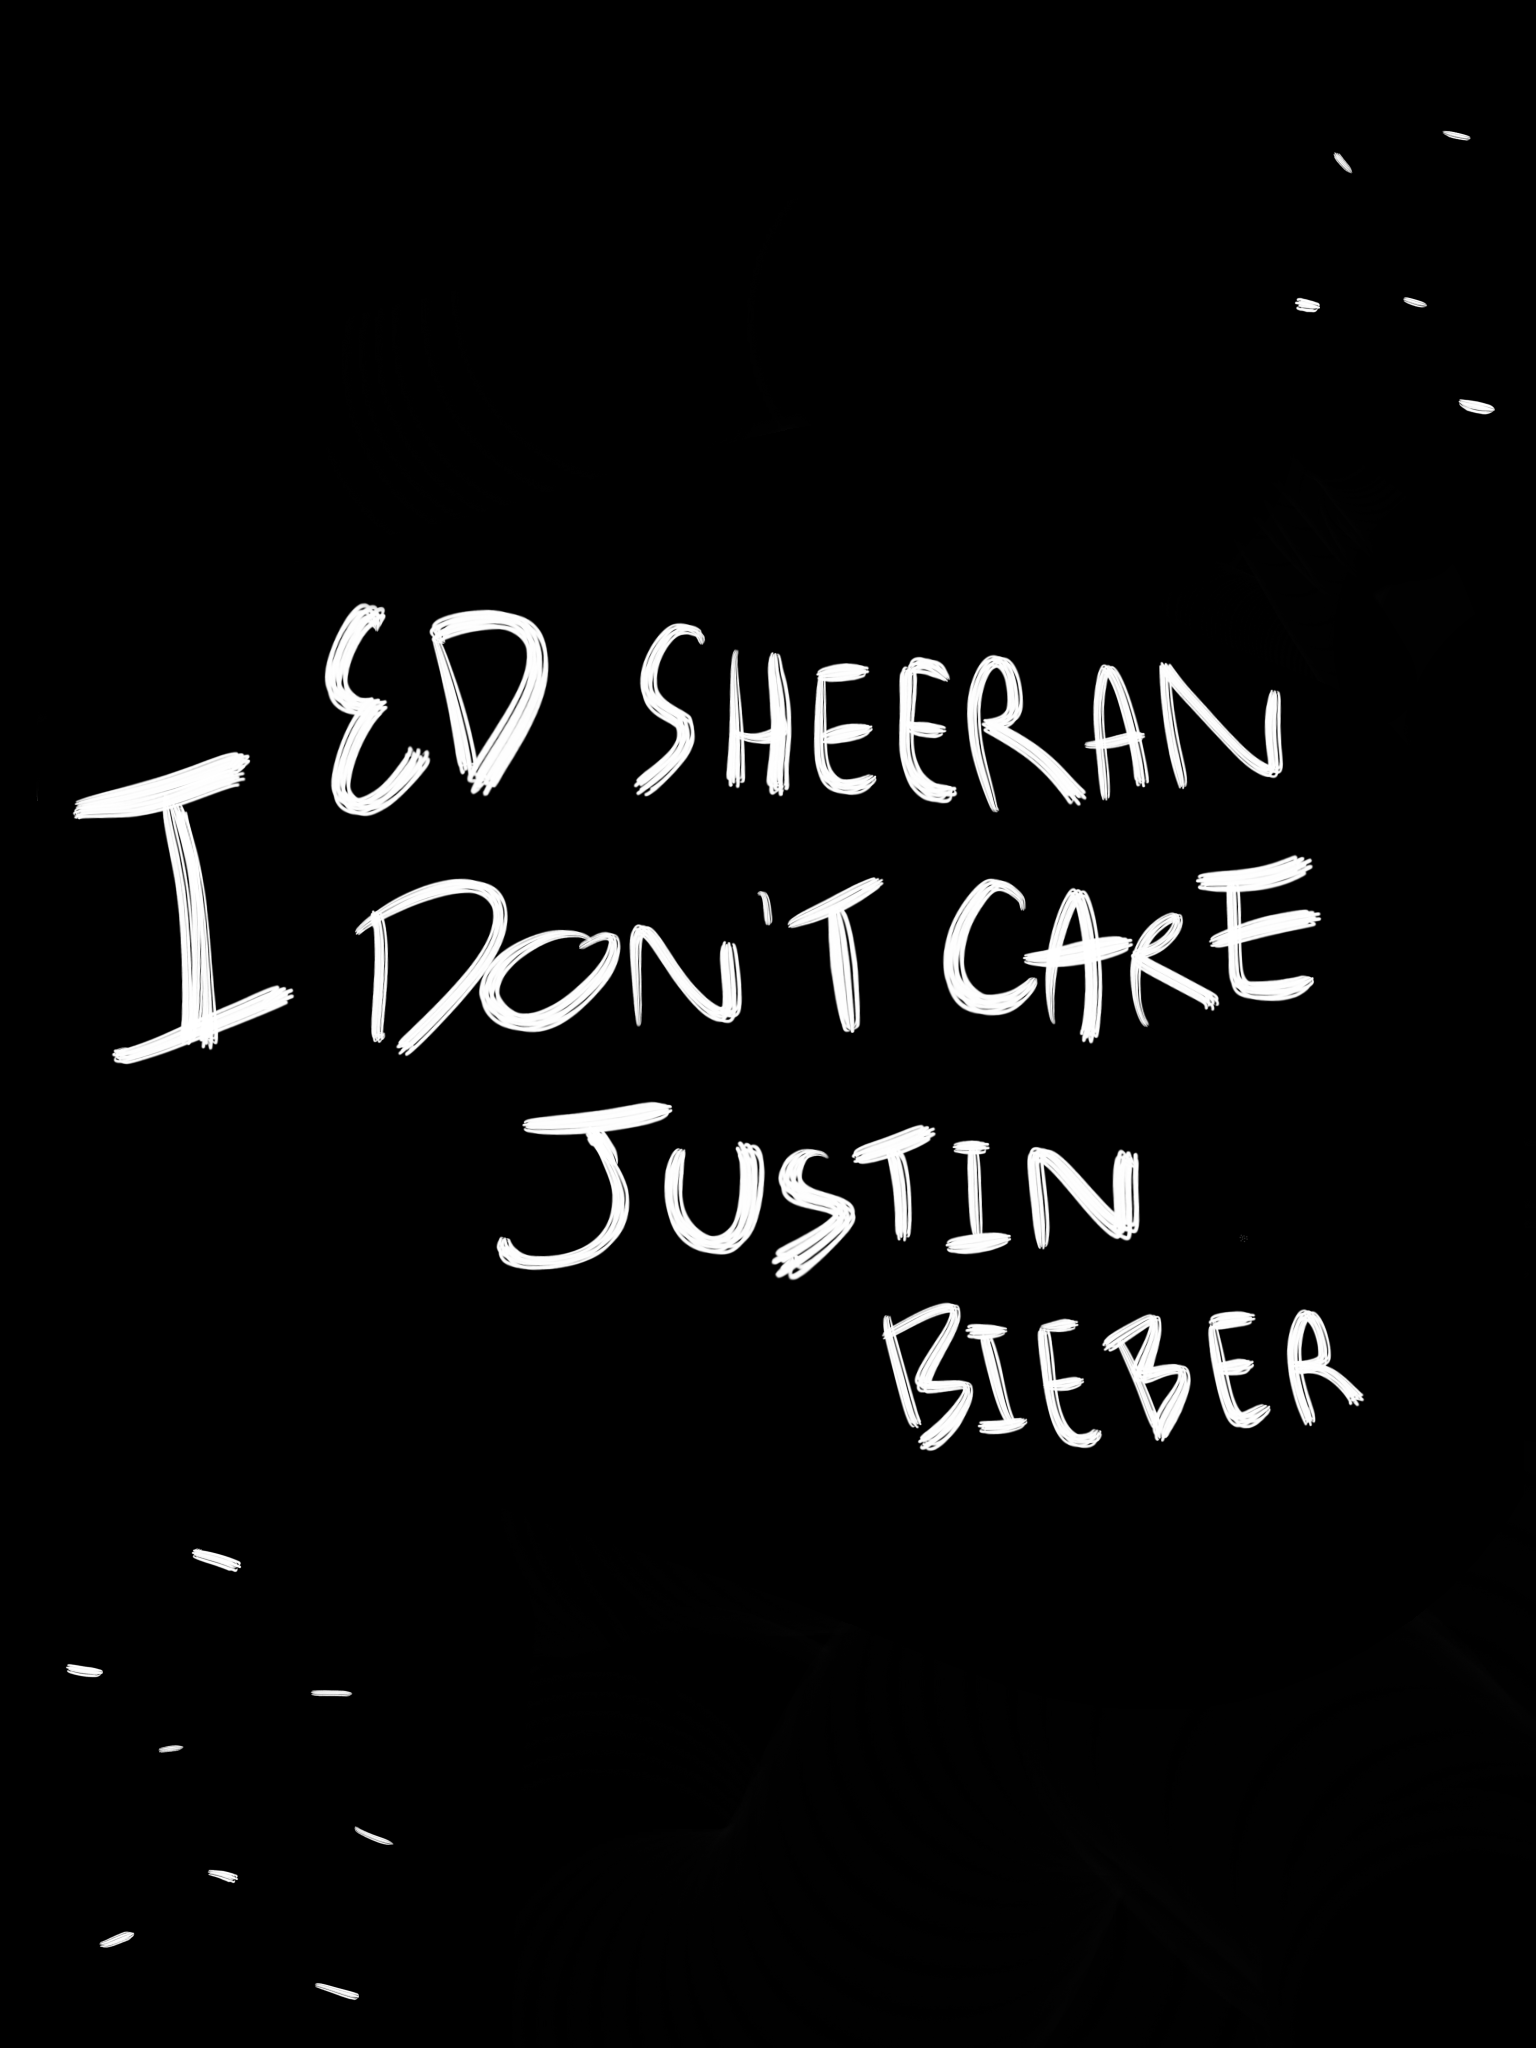 Wallpaper Ed Sheeran Justin Bieber I don't care idc. music